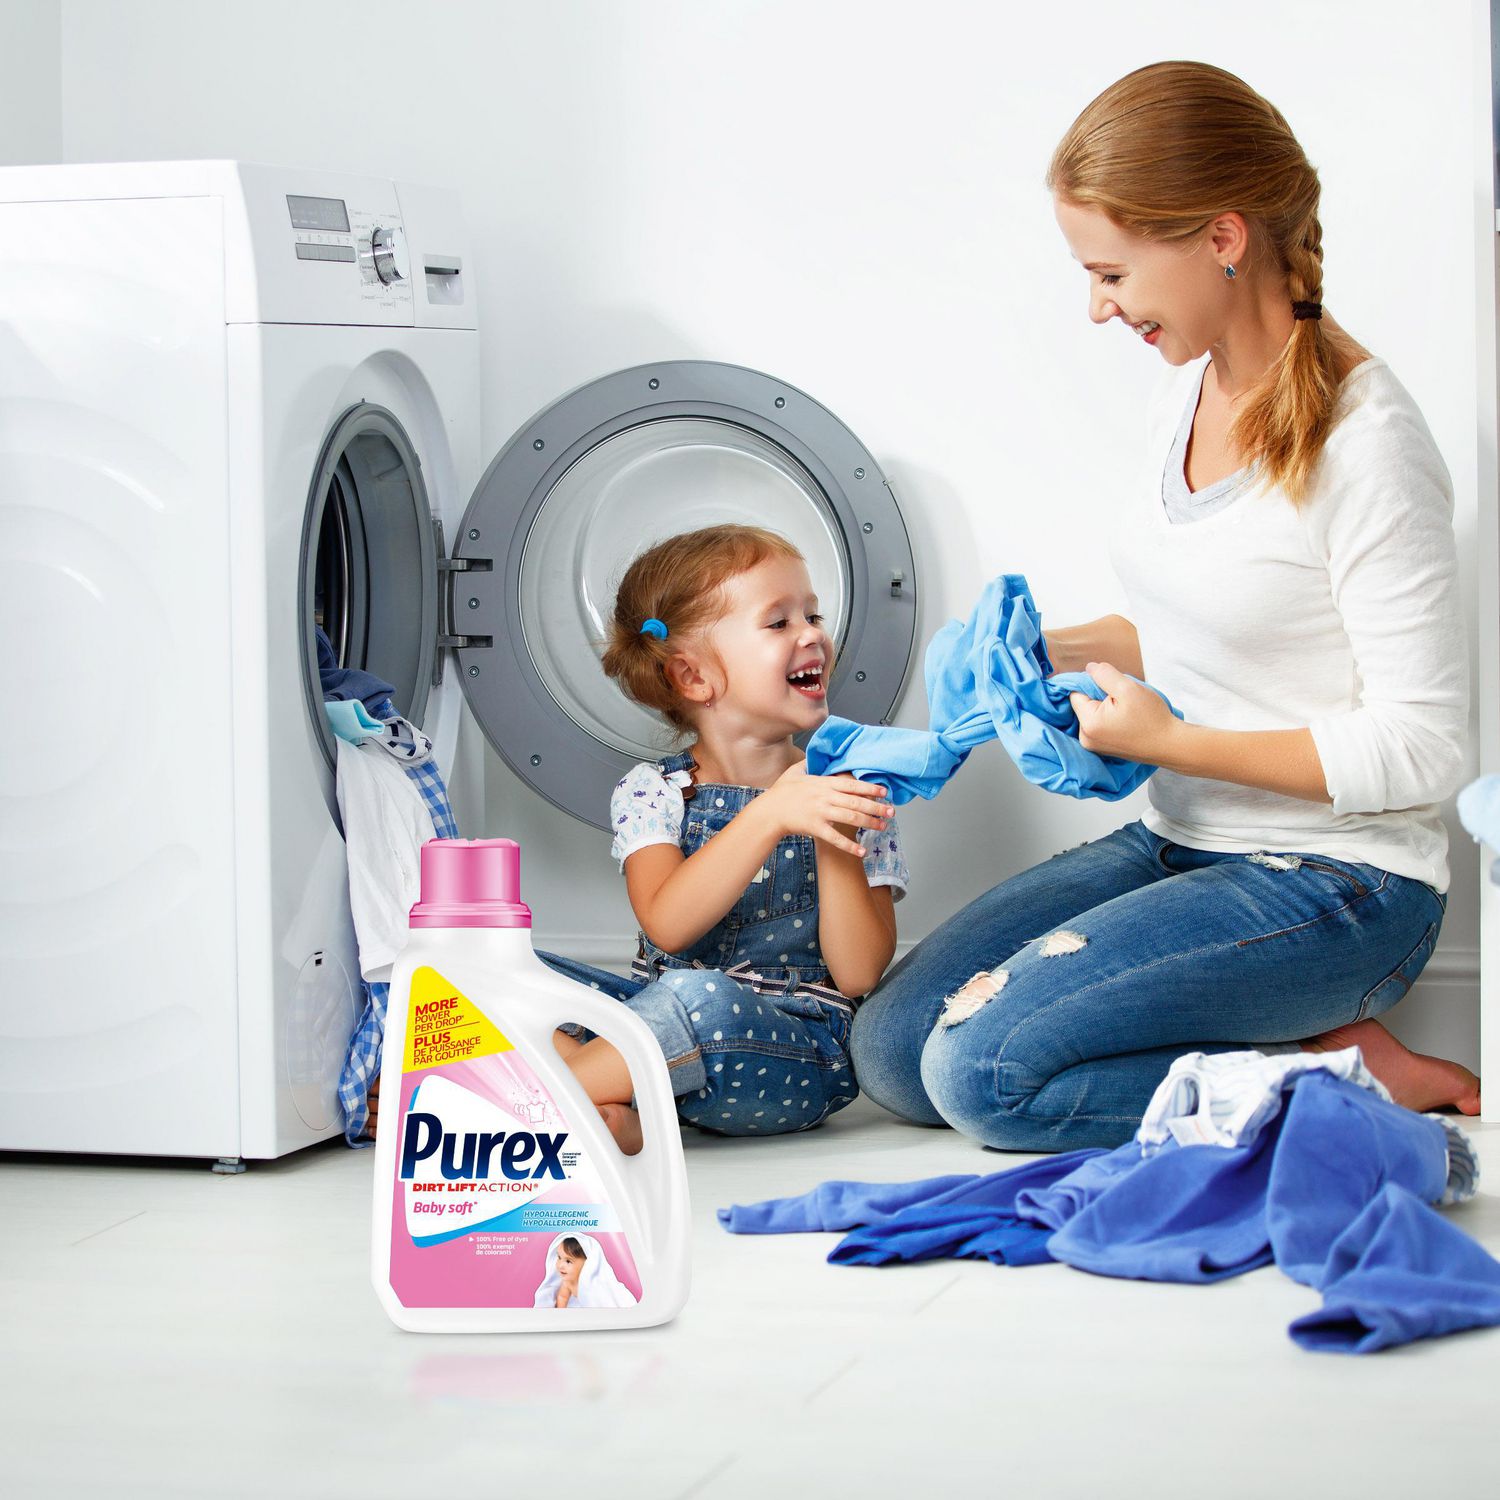 Baby Monsta] NUK Original Baby Laundry Detergent 750ML/ 1000 ML